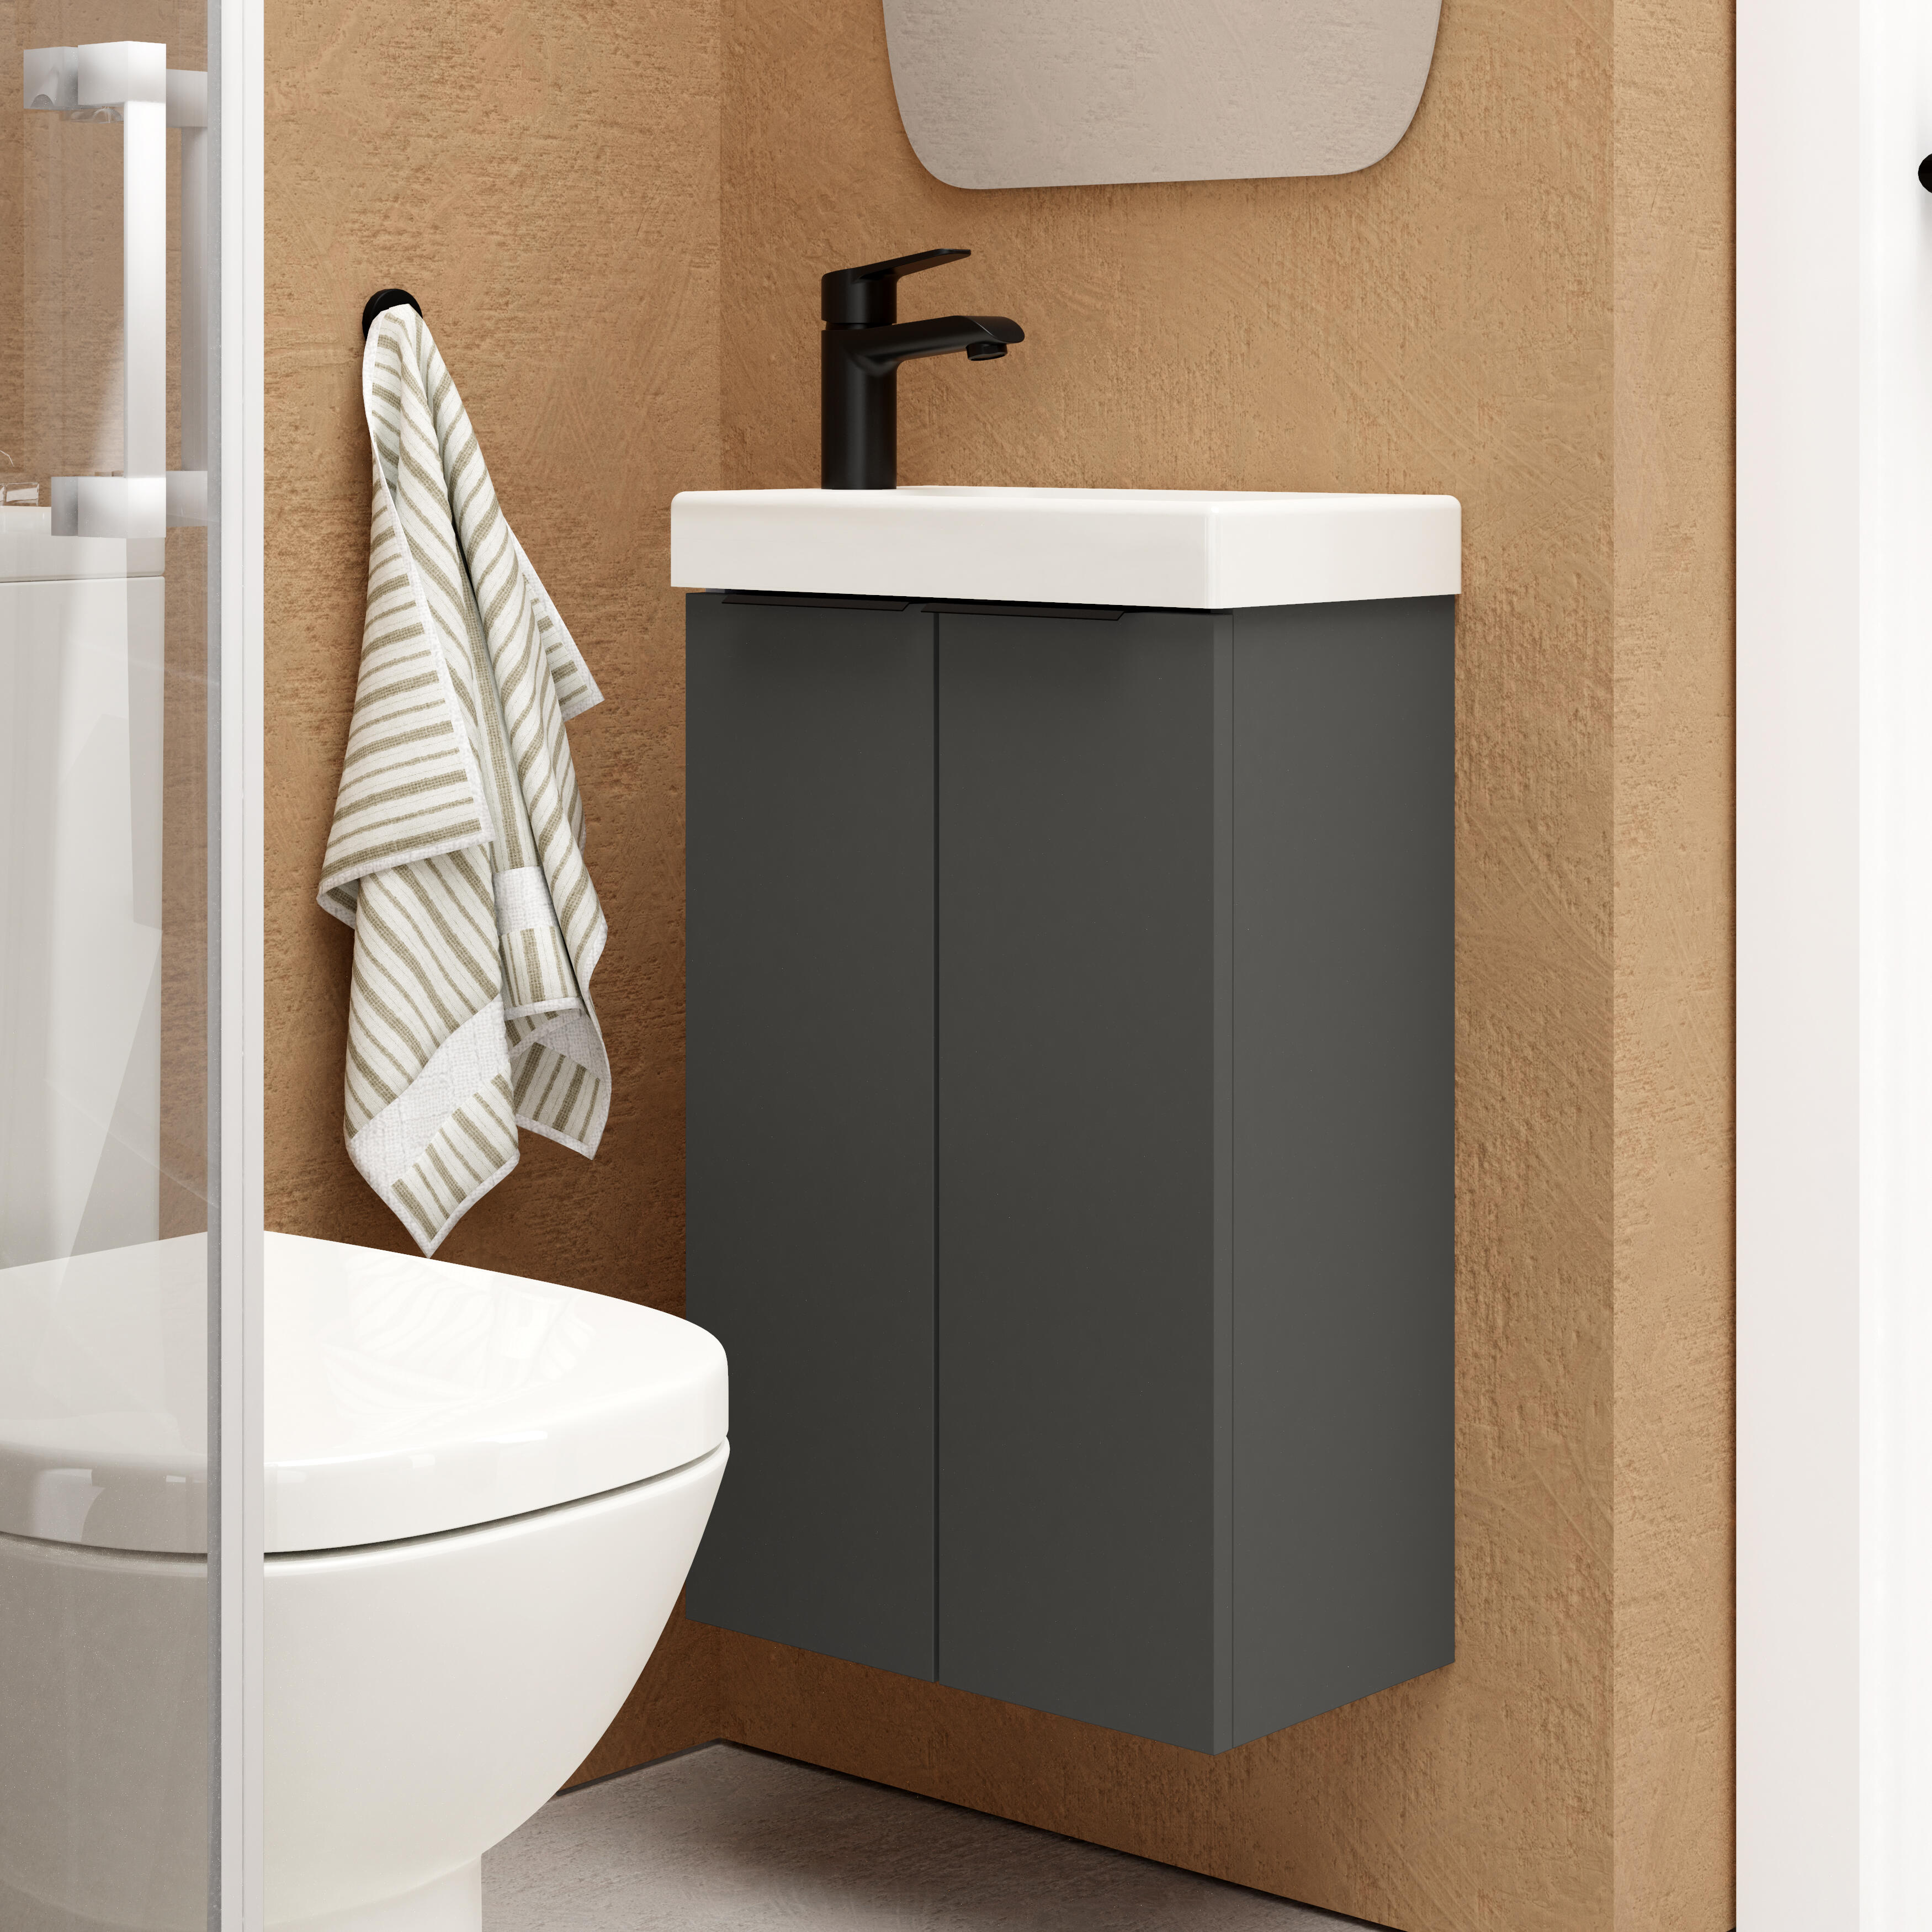 Pack de mueble de baño con lavabo espacio xs gris oscuro mate 40x22 cm